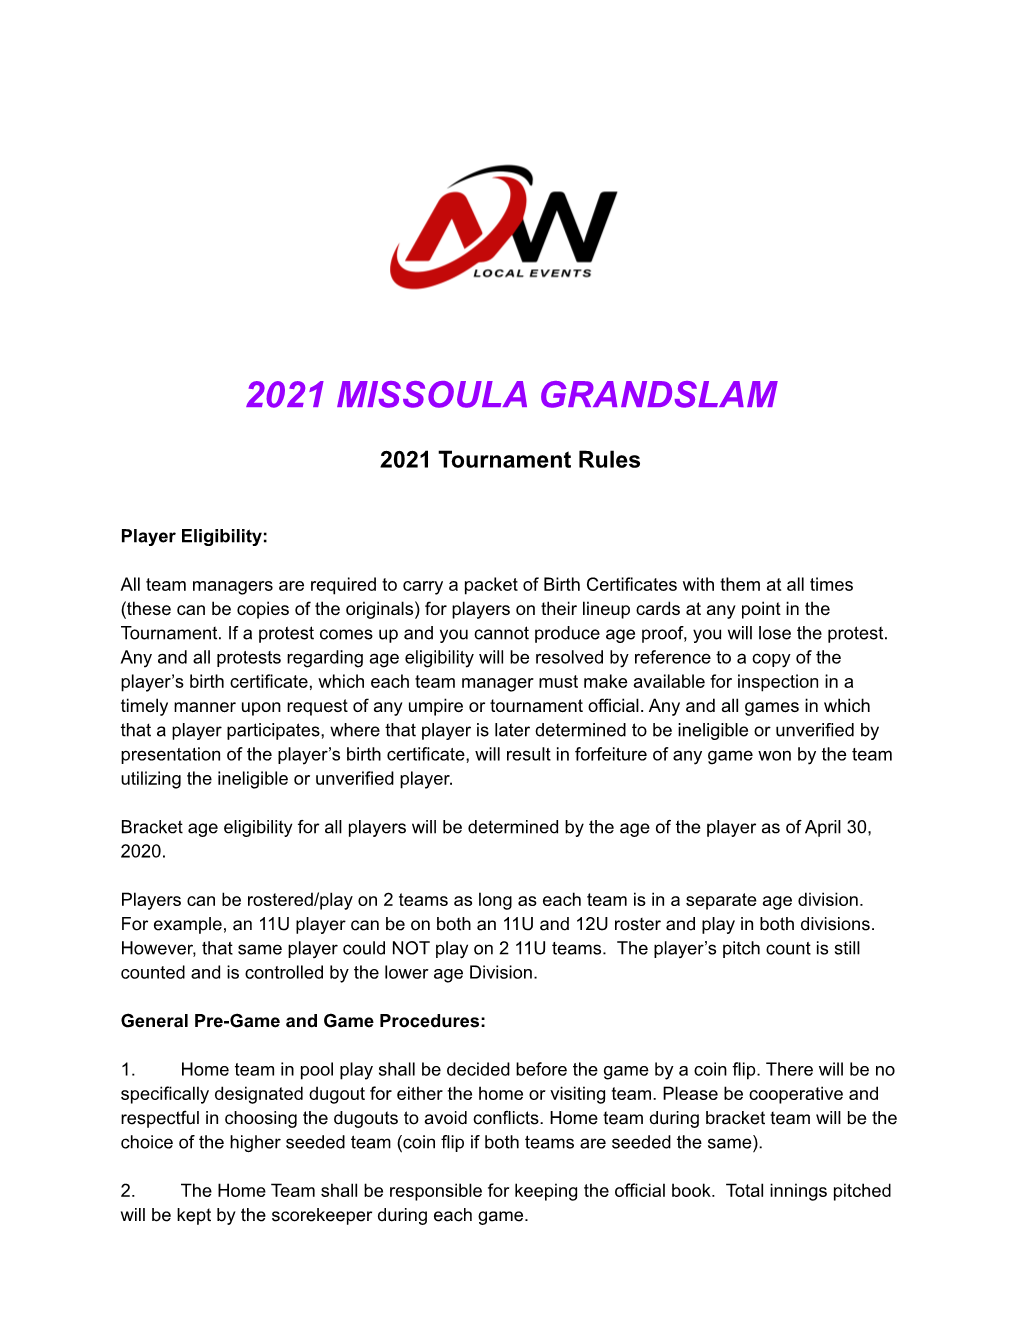 2021 Missoula Grandslam Rules